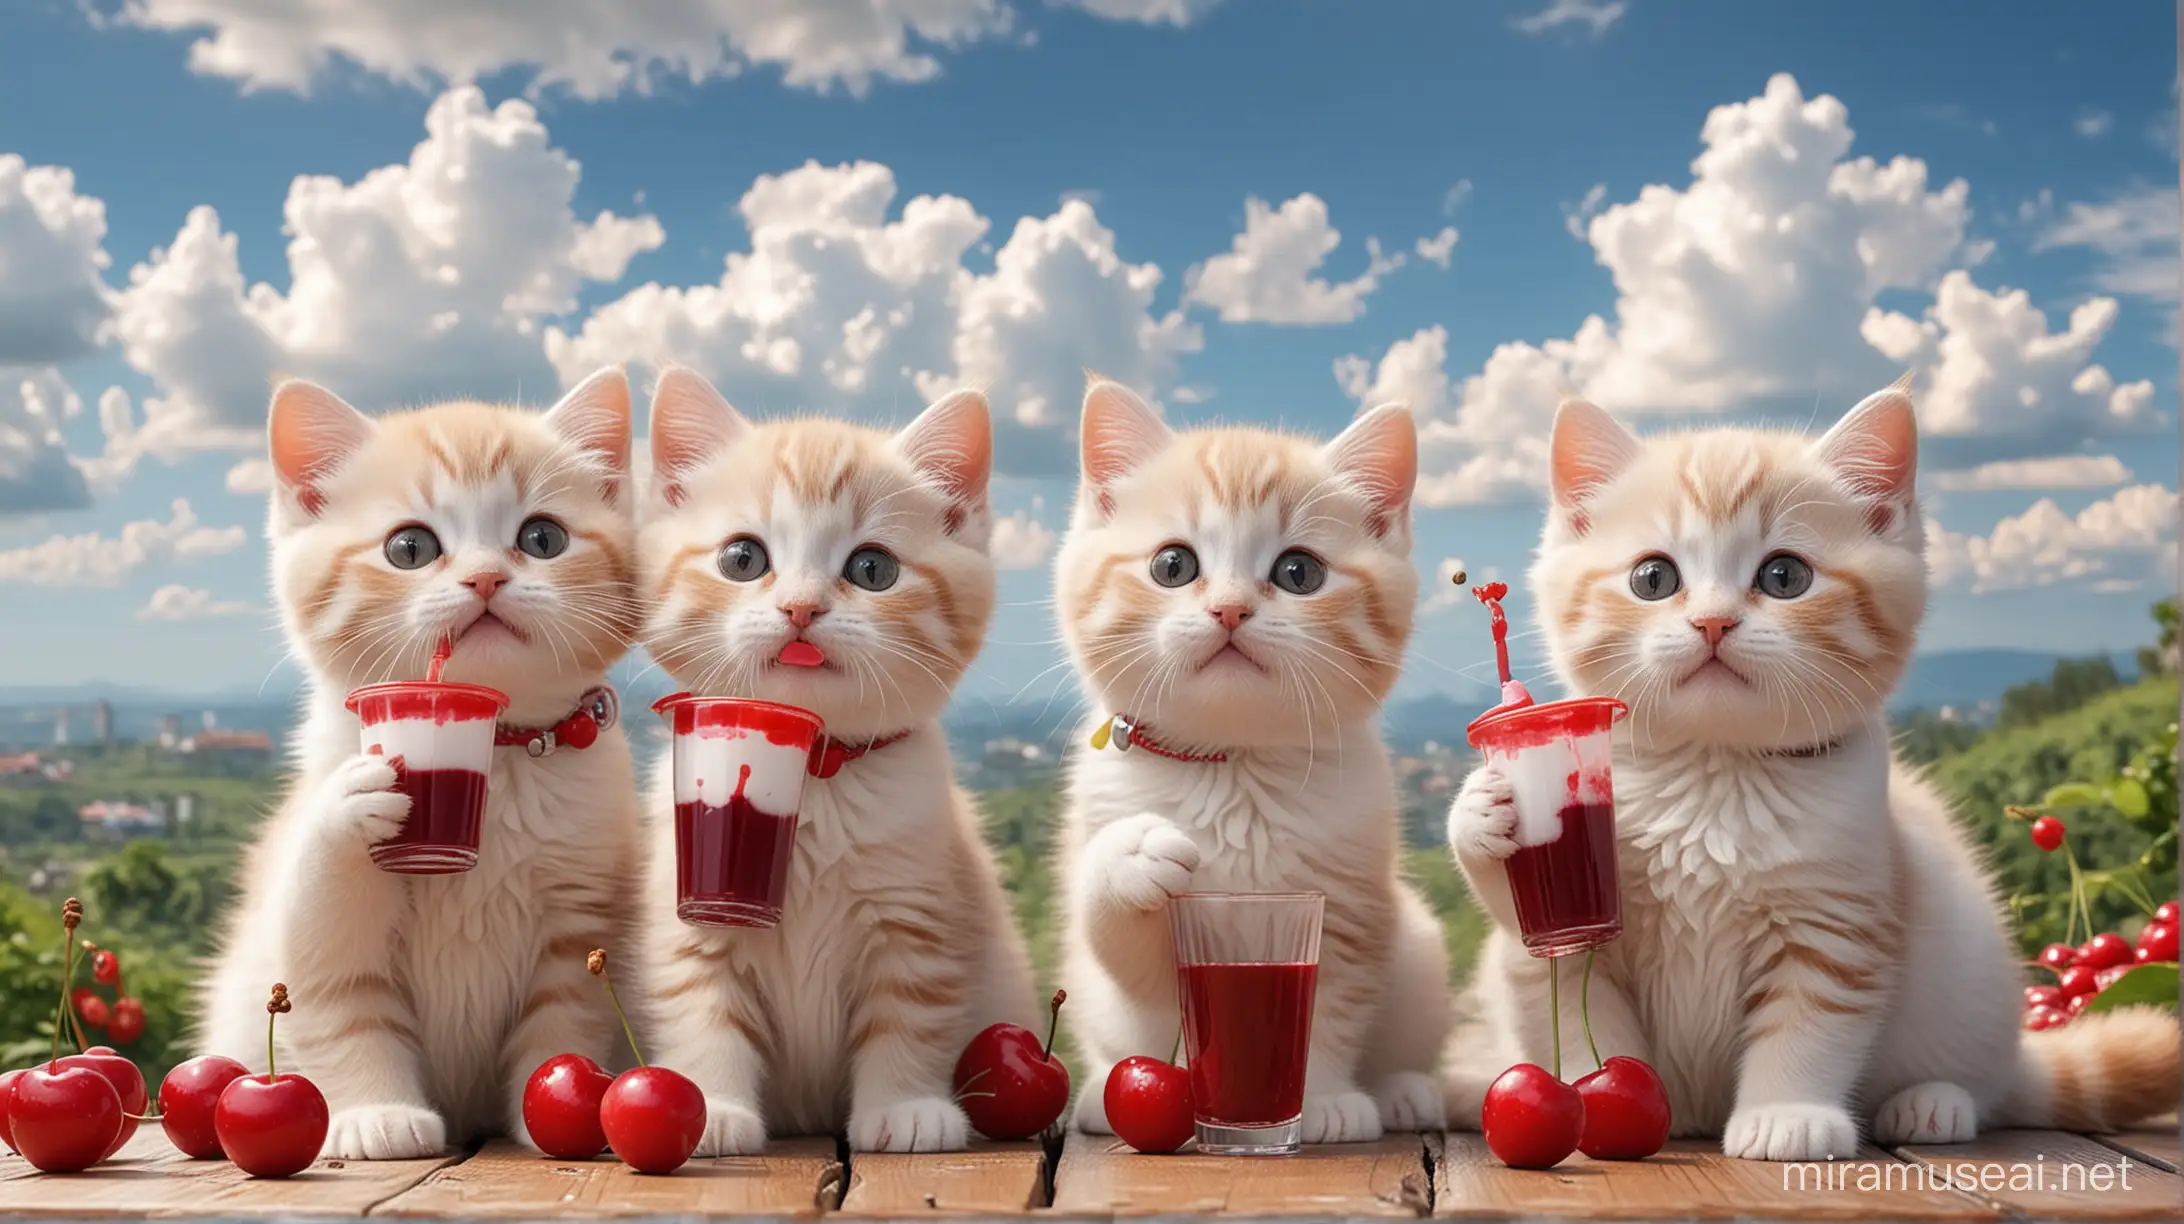 Joyful Kittens Drinking Cherry Juice Amidst Beautiful Scenery